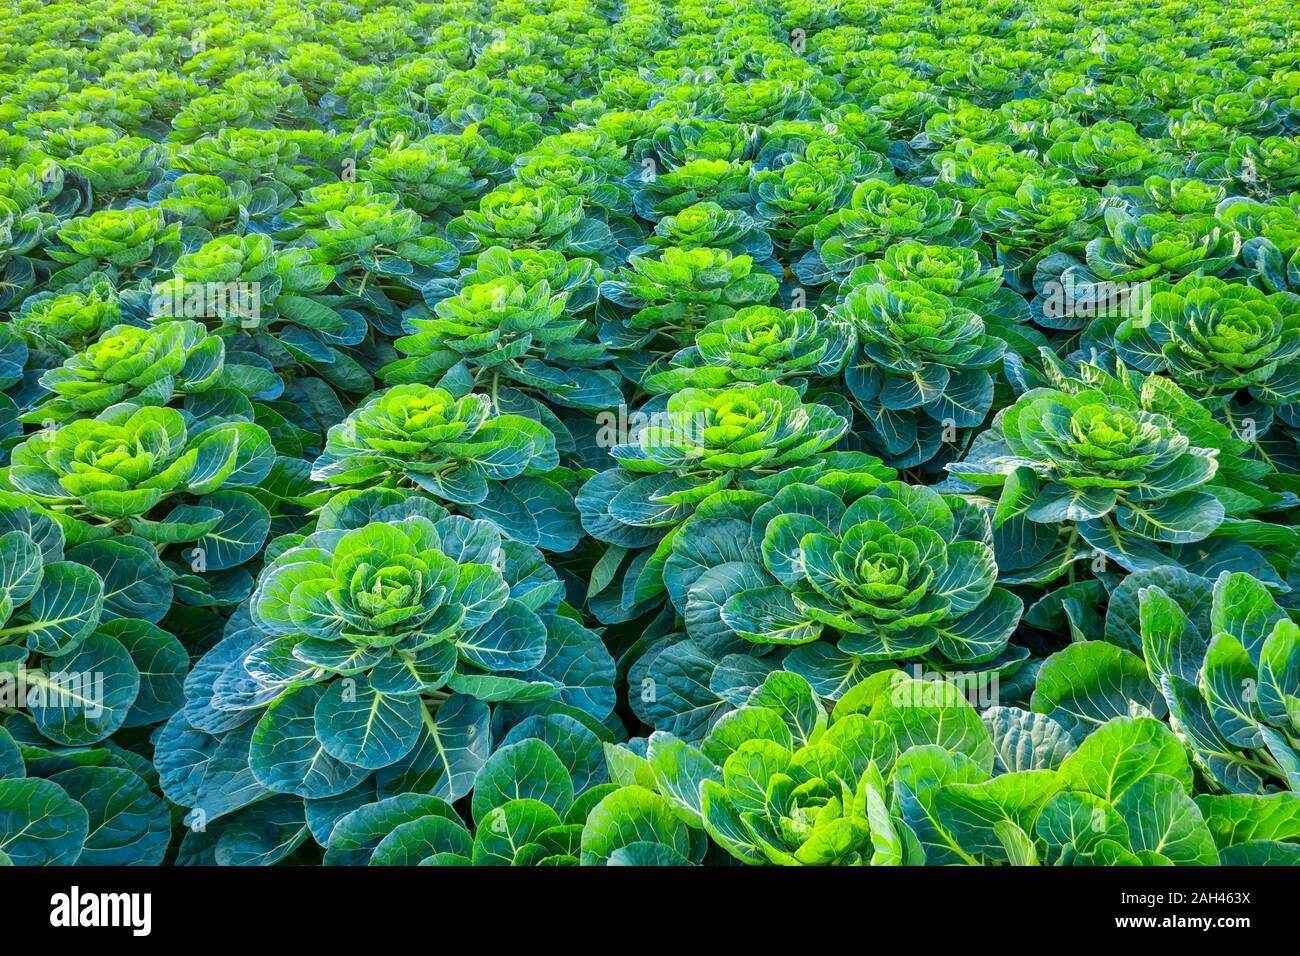 Scotland, East Lothian, Field of brussels sprouts (Brassica oleracea) Stock Photo